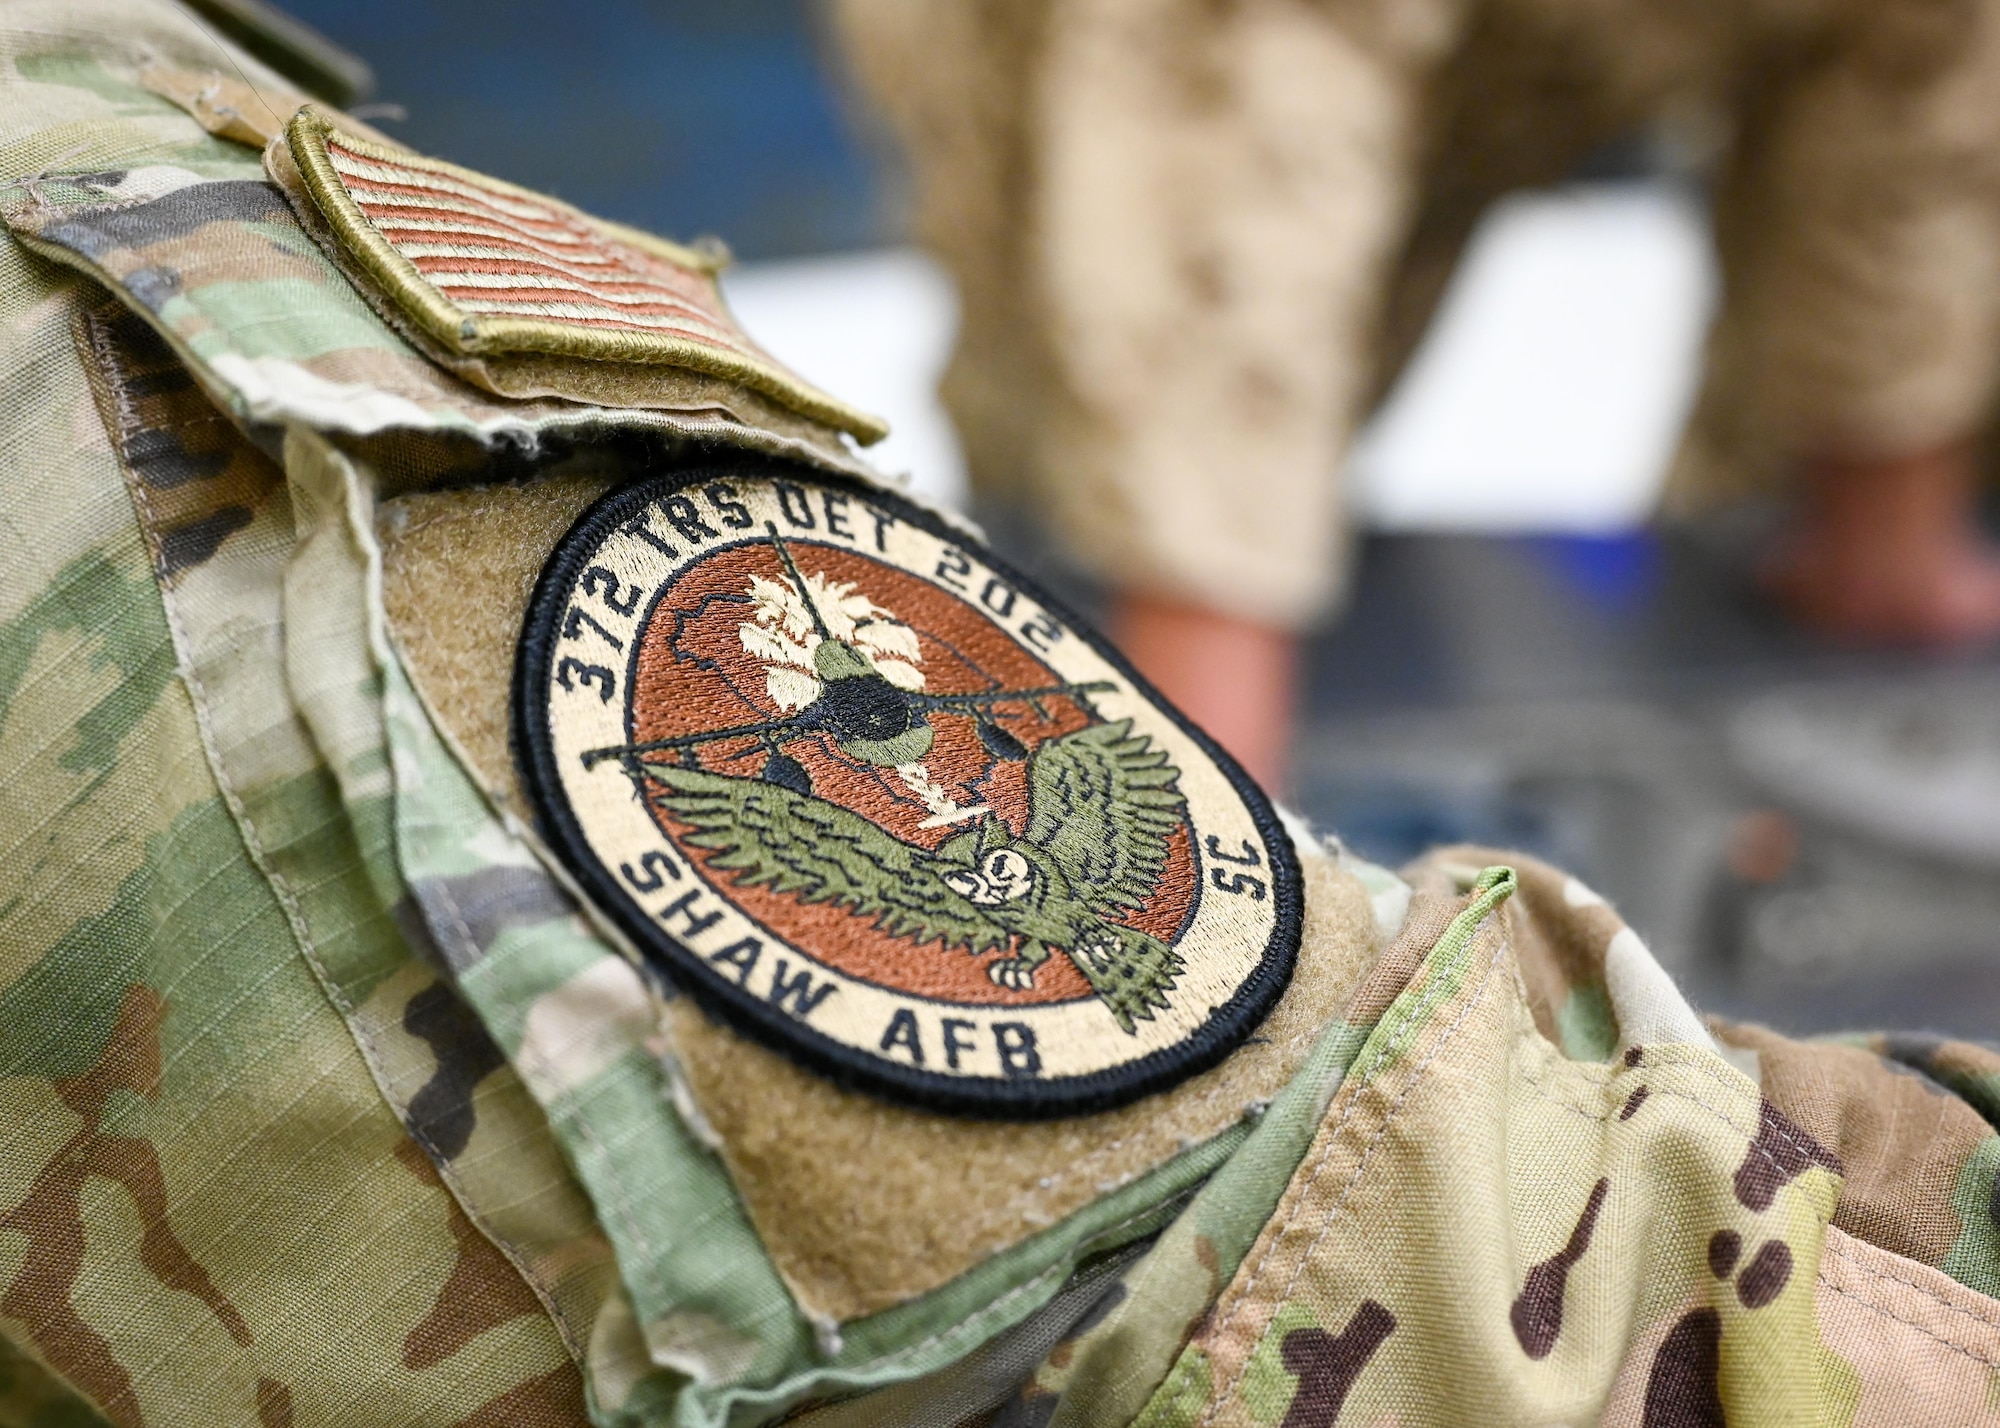 A close-up of a patch on an OCP uniform.